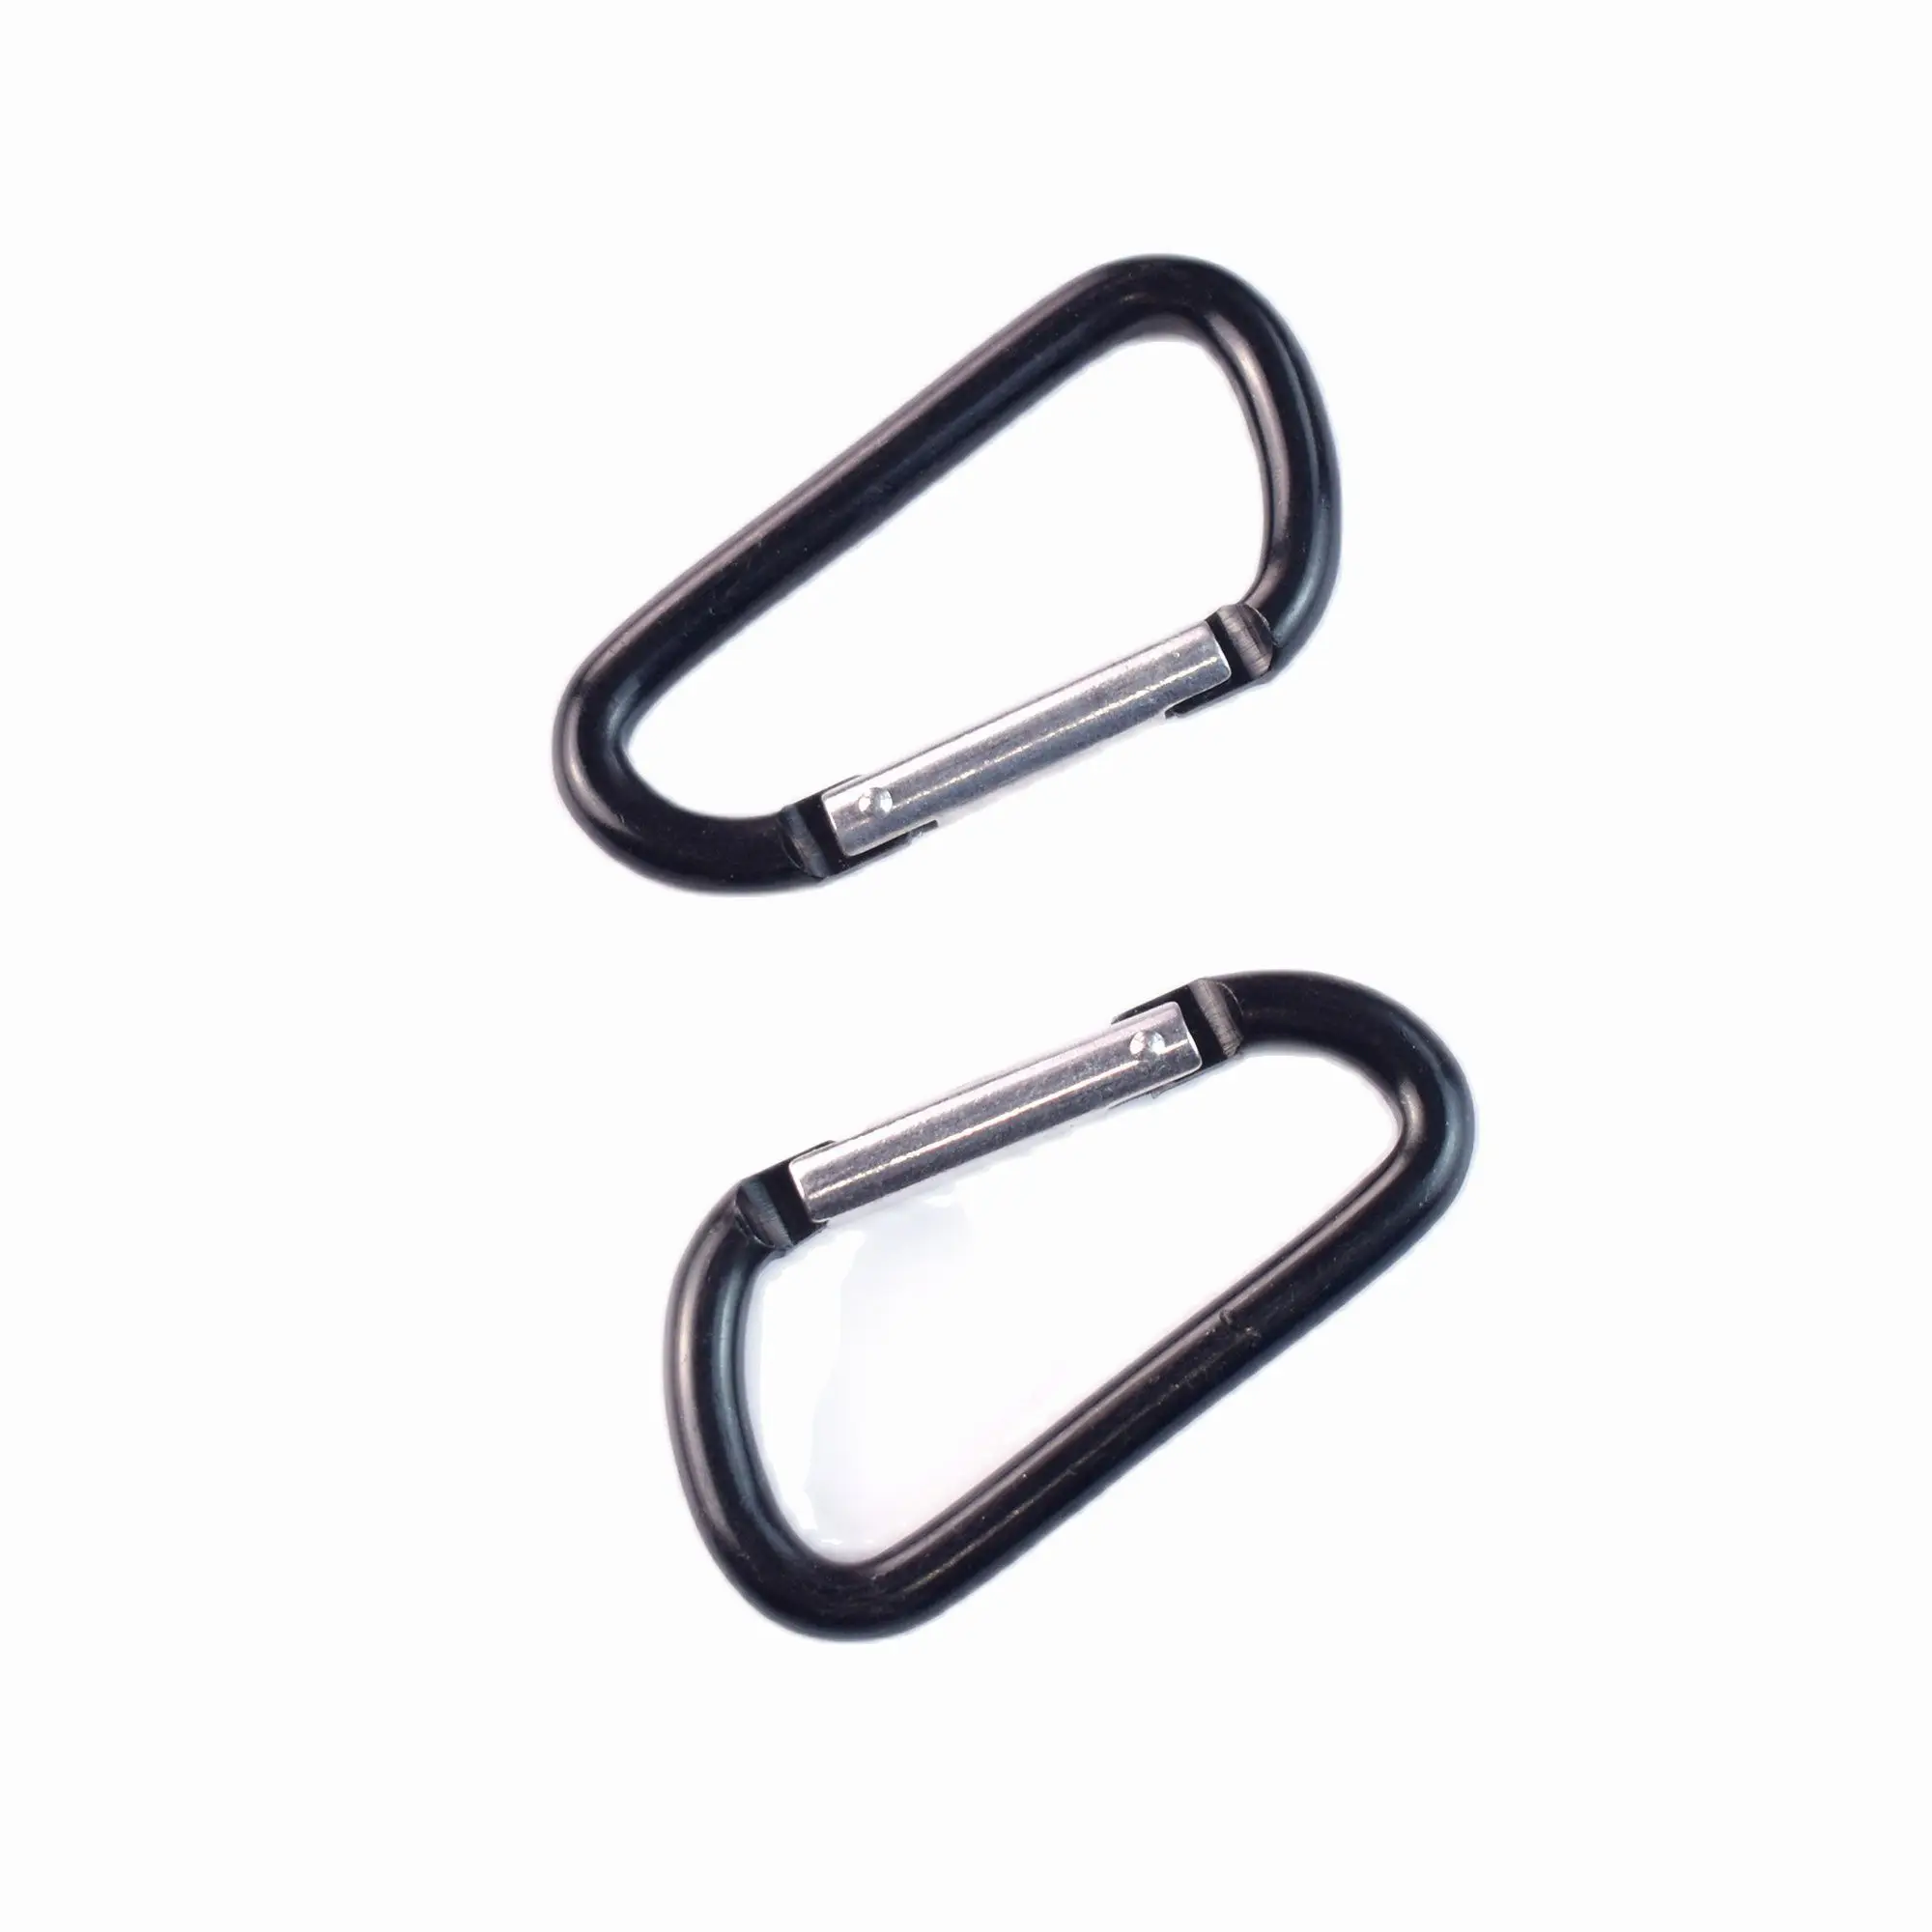 

Aluminum Carabiner medium Keychain Clip D Shape Spring Snap Locking Buckle Hooks ClipsFor Outdoor Camping 2PCS